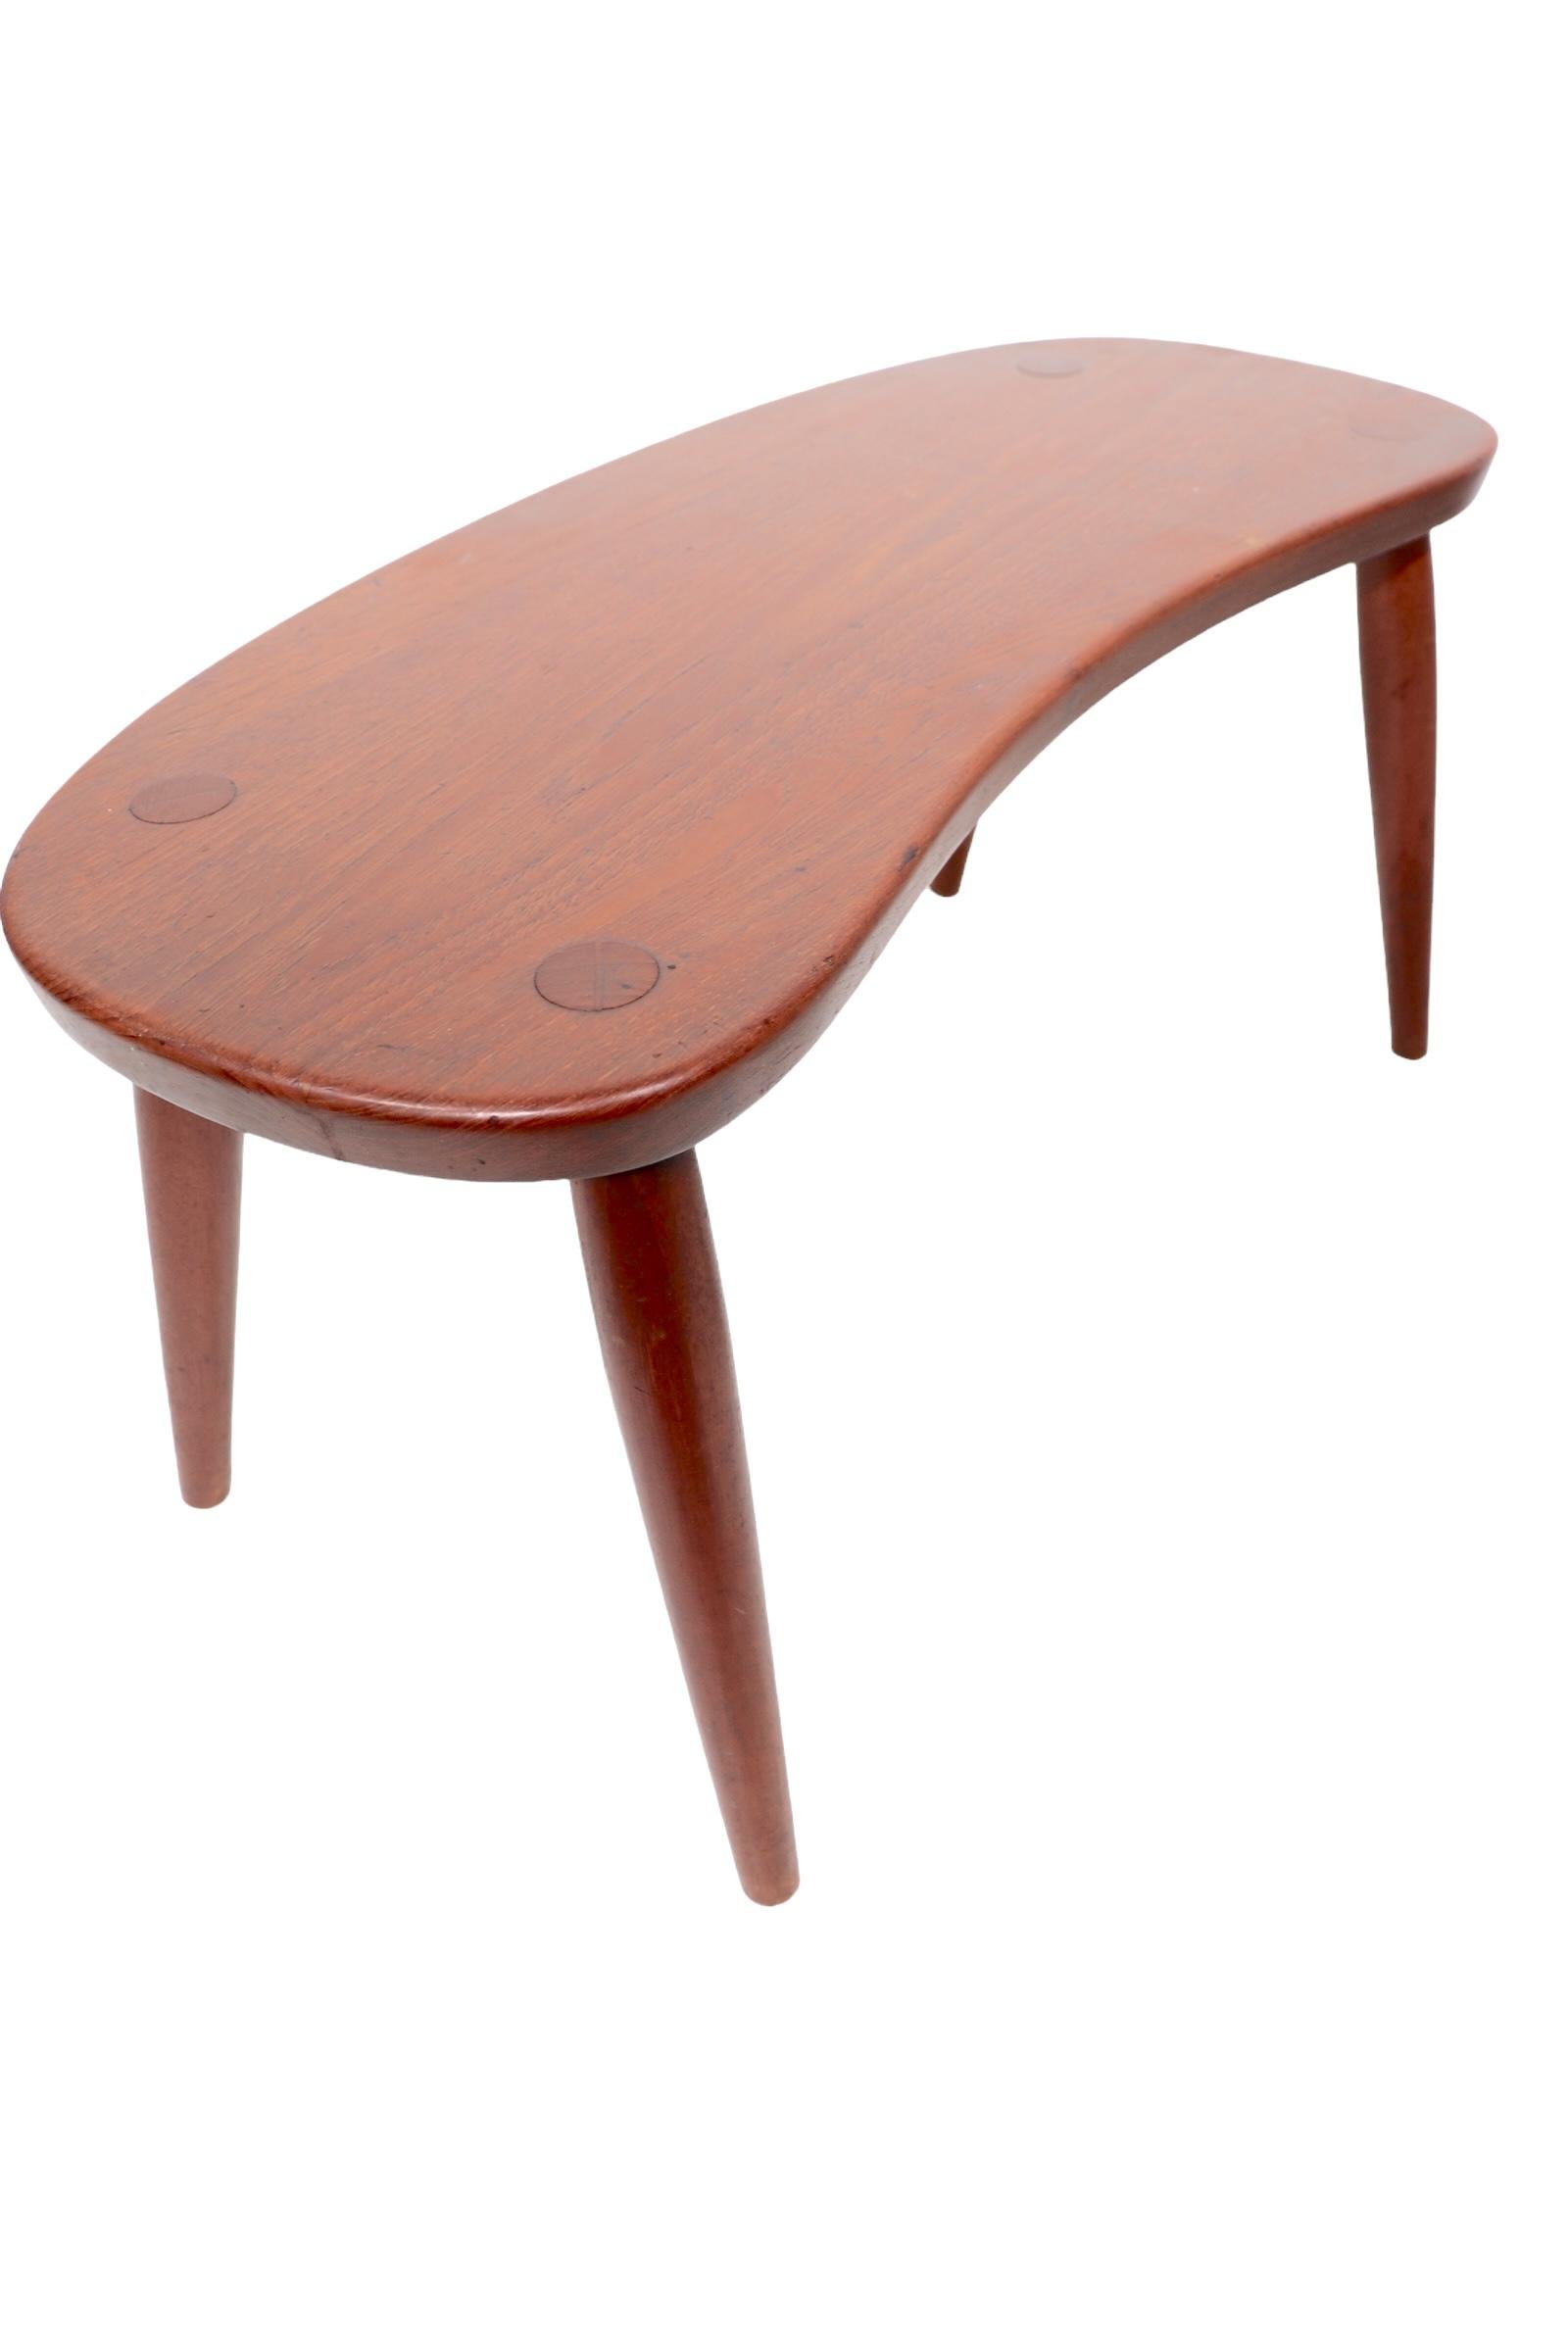 Pr. Danish Mid Century Modern Tables Made by Illum Bolighus att. to Josef Frank  For Sale 3